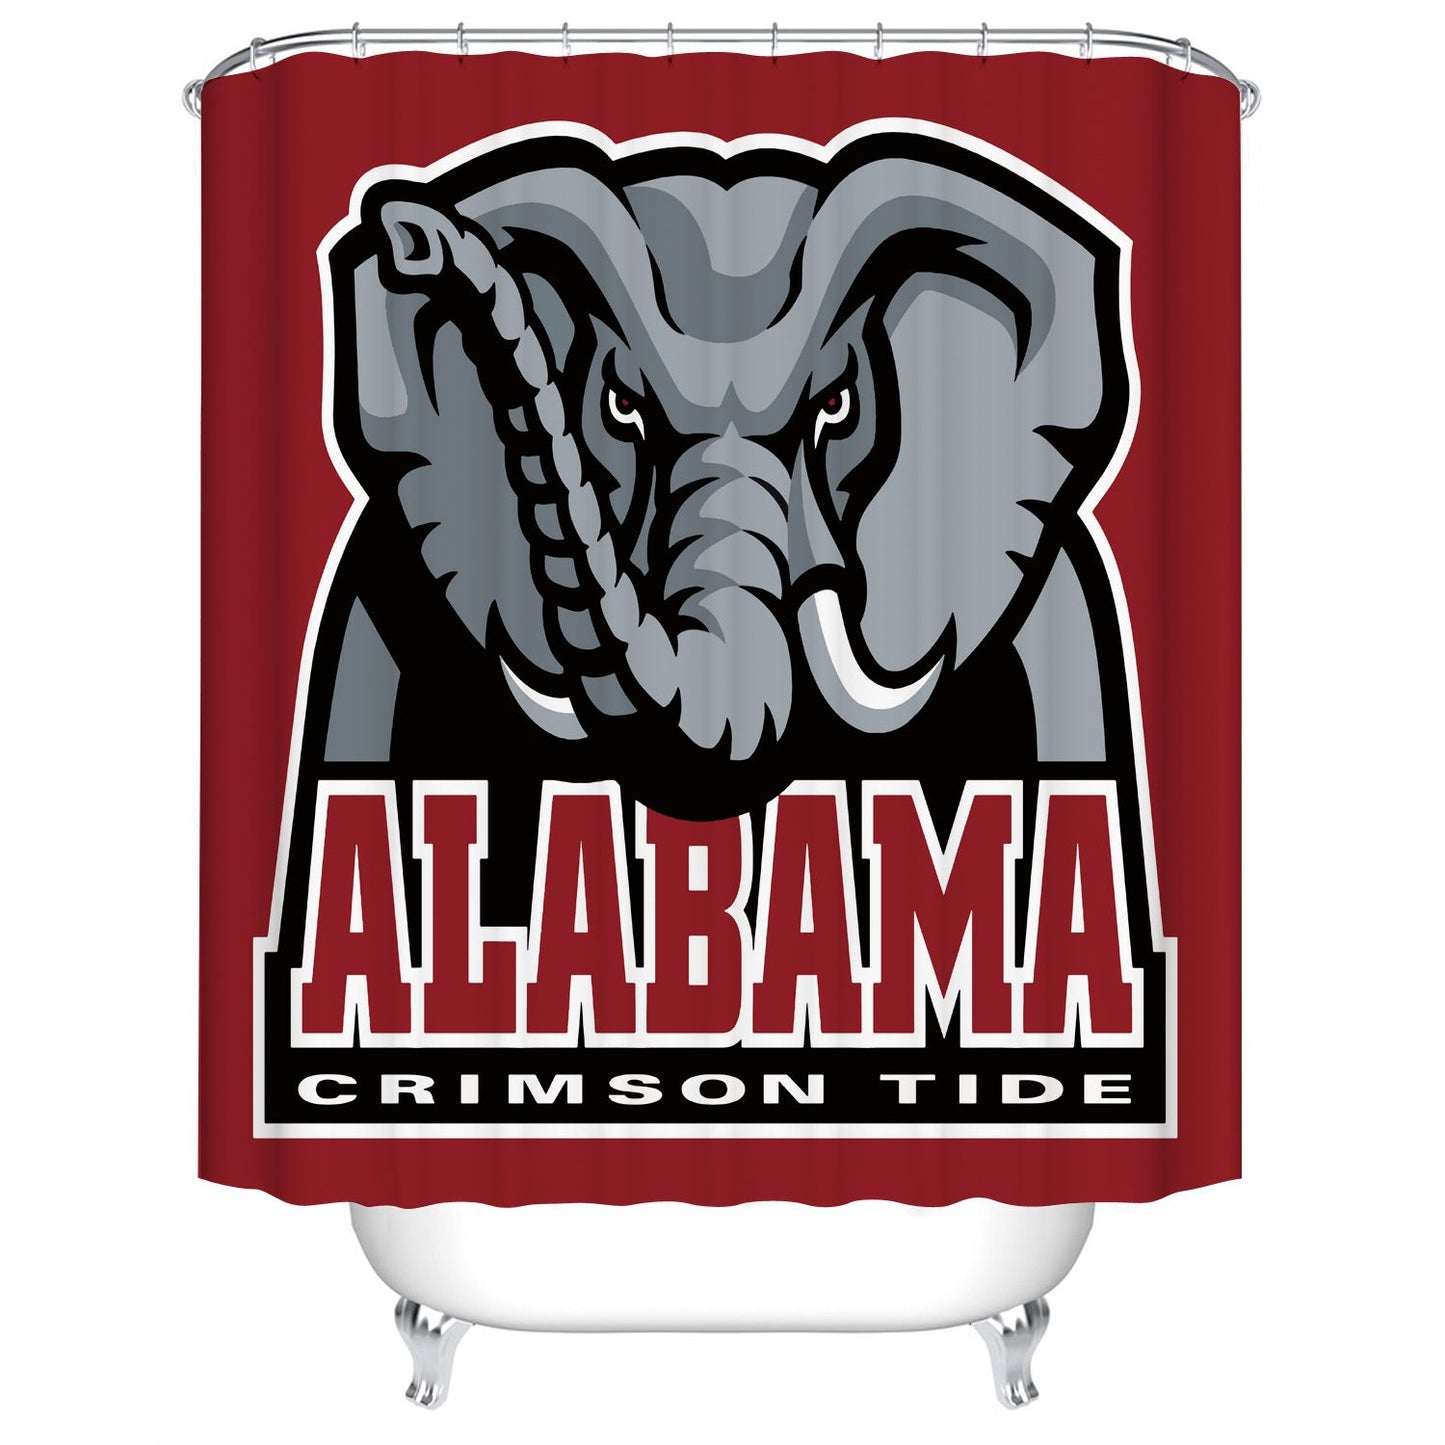 Elephant Alabama Crimson Tide Shower Curtain